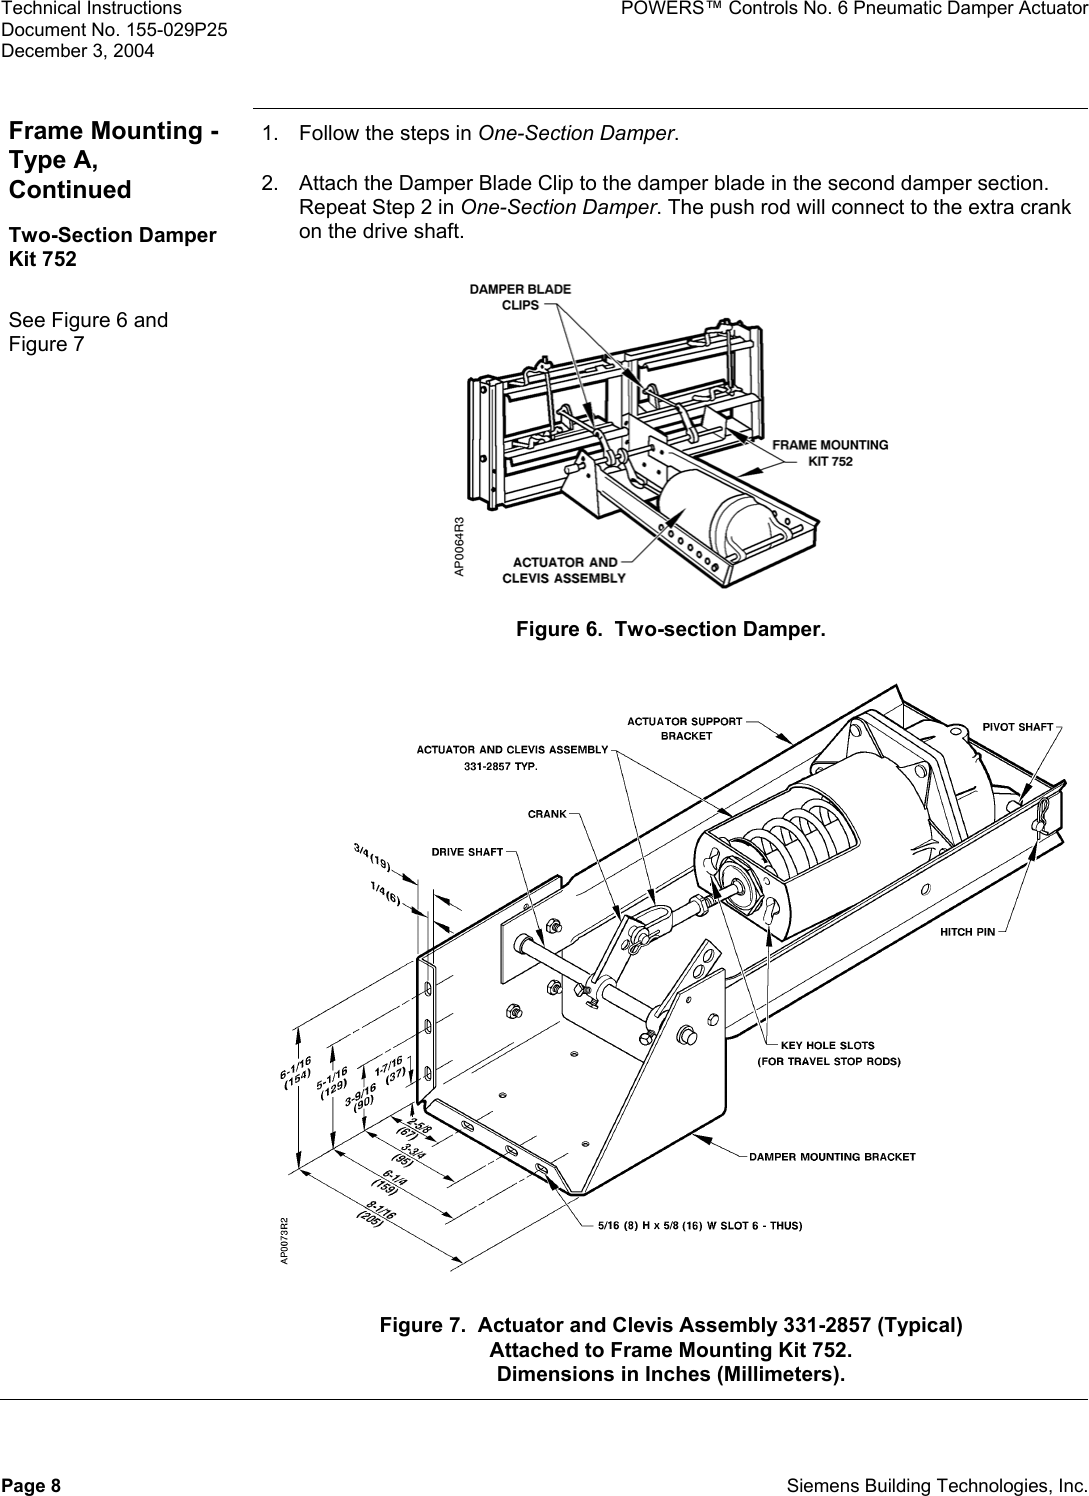 Page 8 of 12 - Siemens Siemens-331-2856-332-2856-Ap-331-3-Users-Manual- Powers Control - No. 6 Pneumatic Damper Actuator  Siemens-331-2856-332-2856-ap-331-3-users-manual